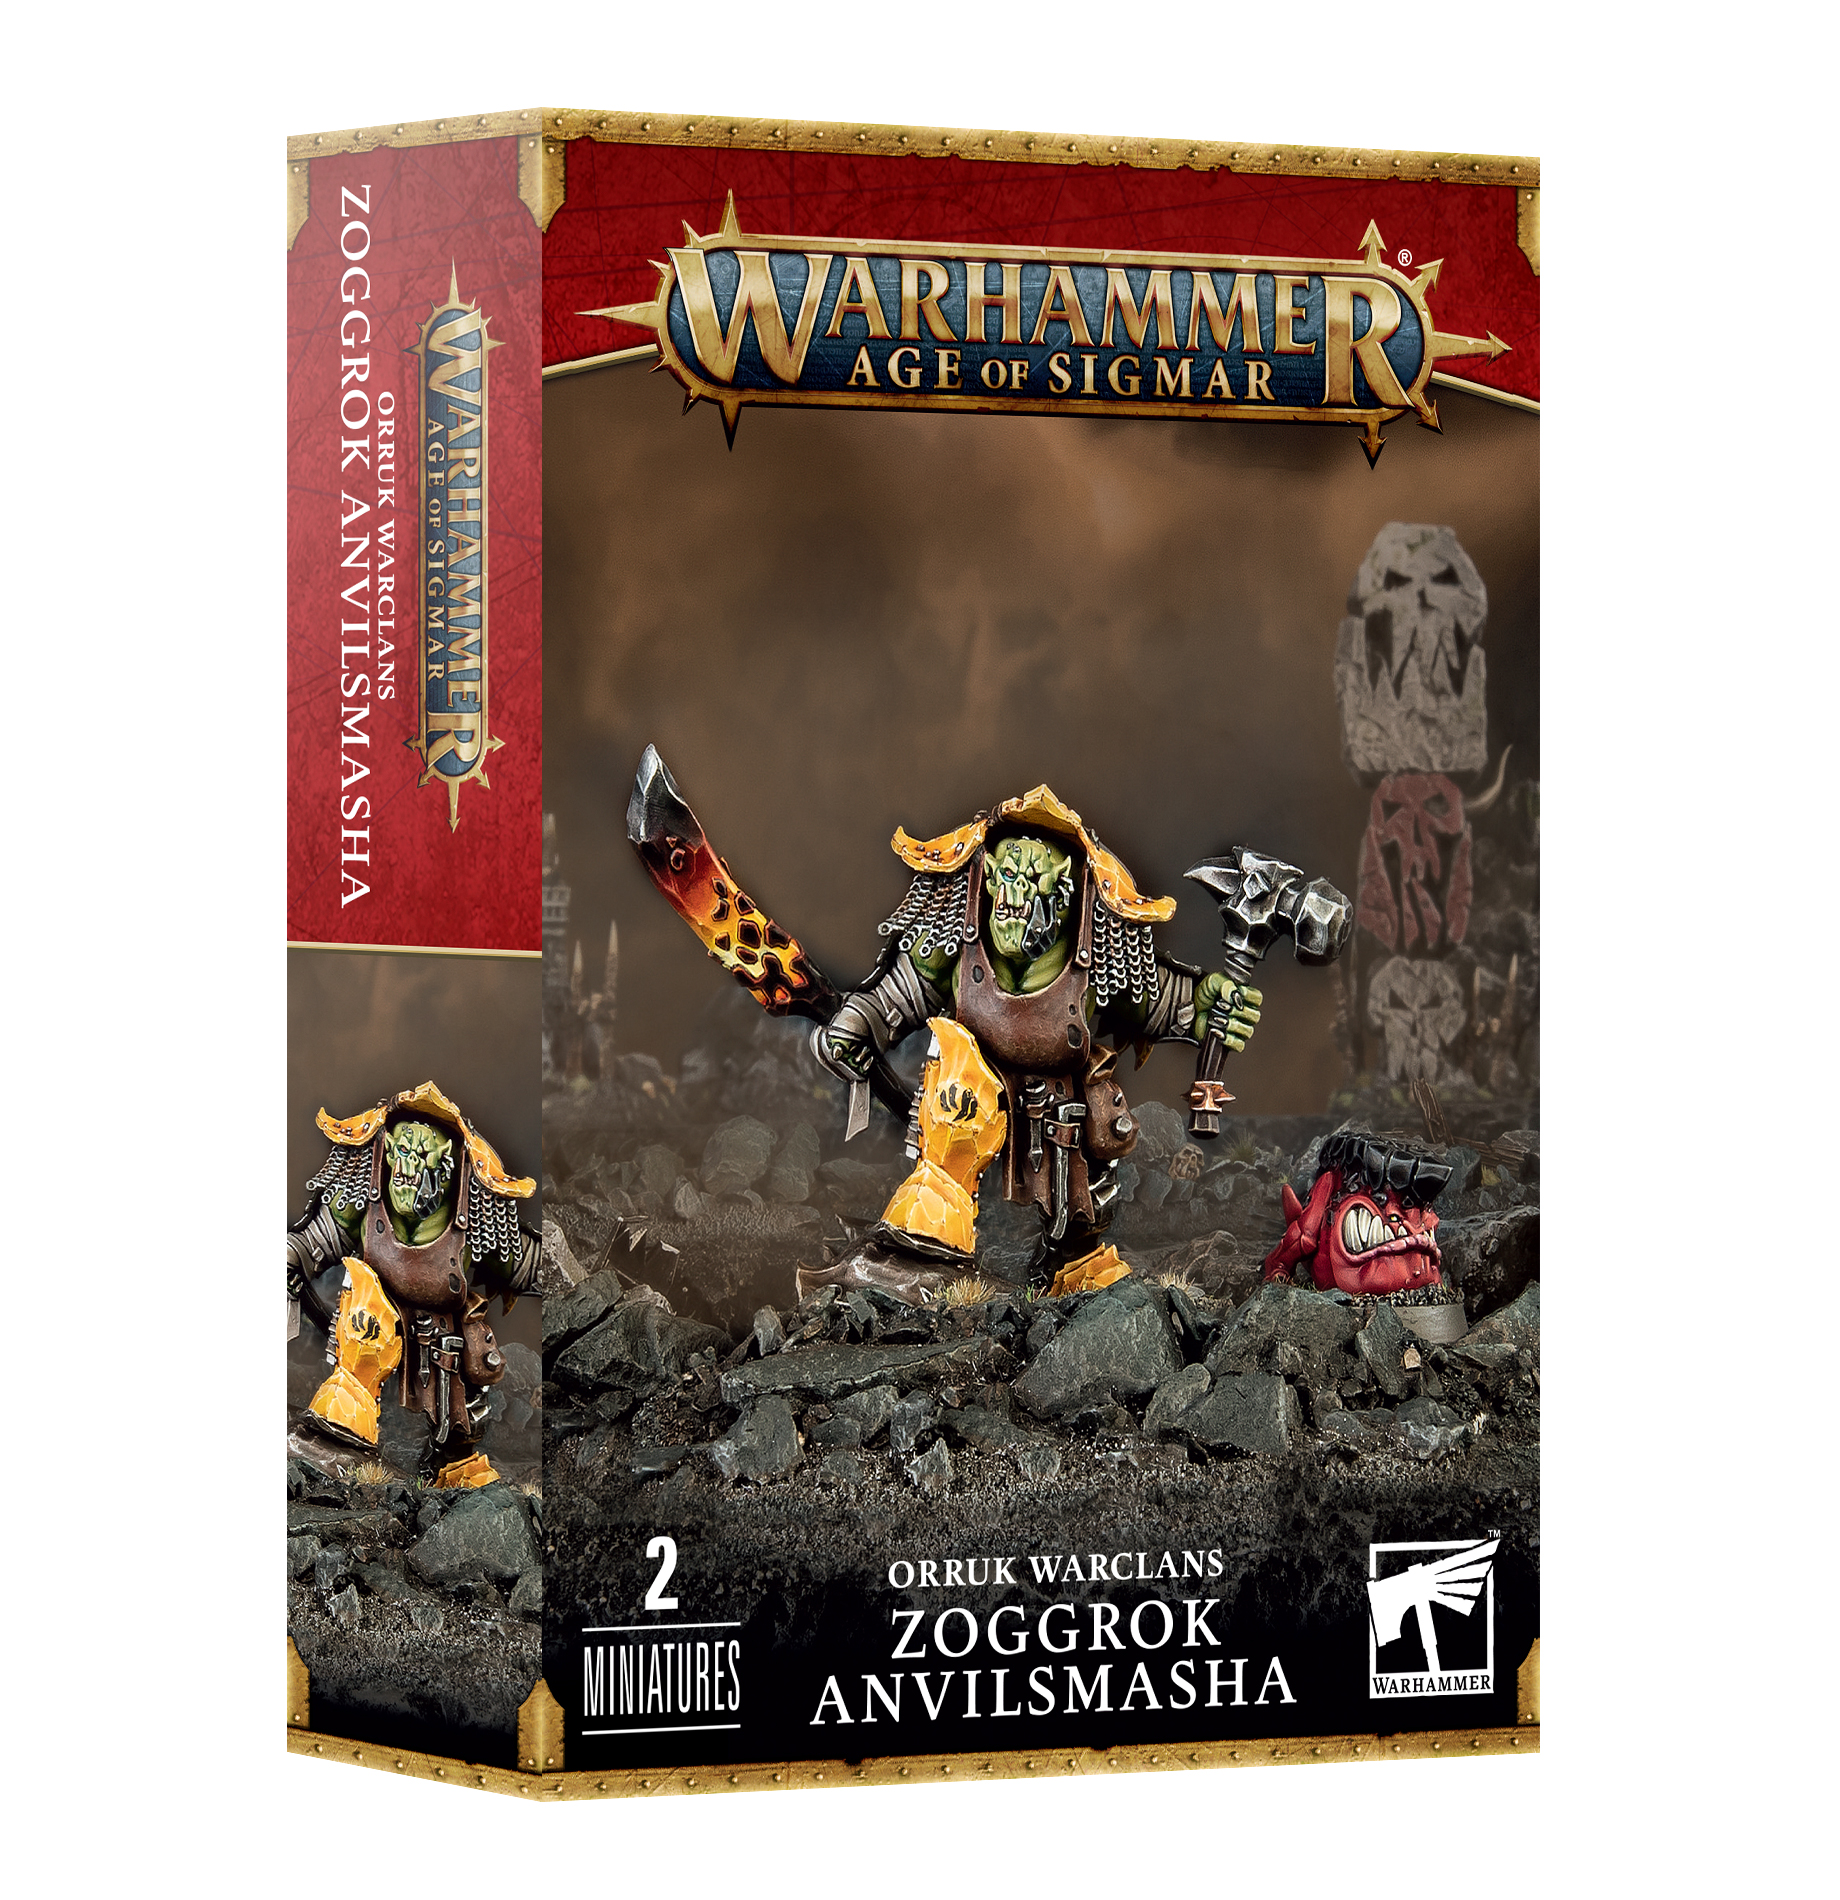 Zoggrok Anvilsmasha - Orruk Warclans - 89-62 - Warhammer Age of Sigmar